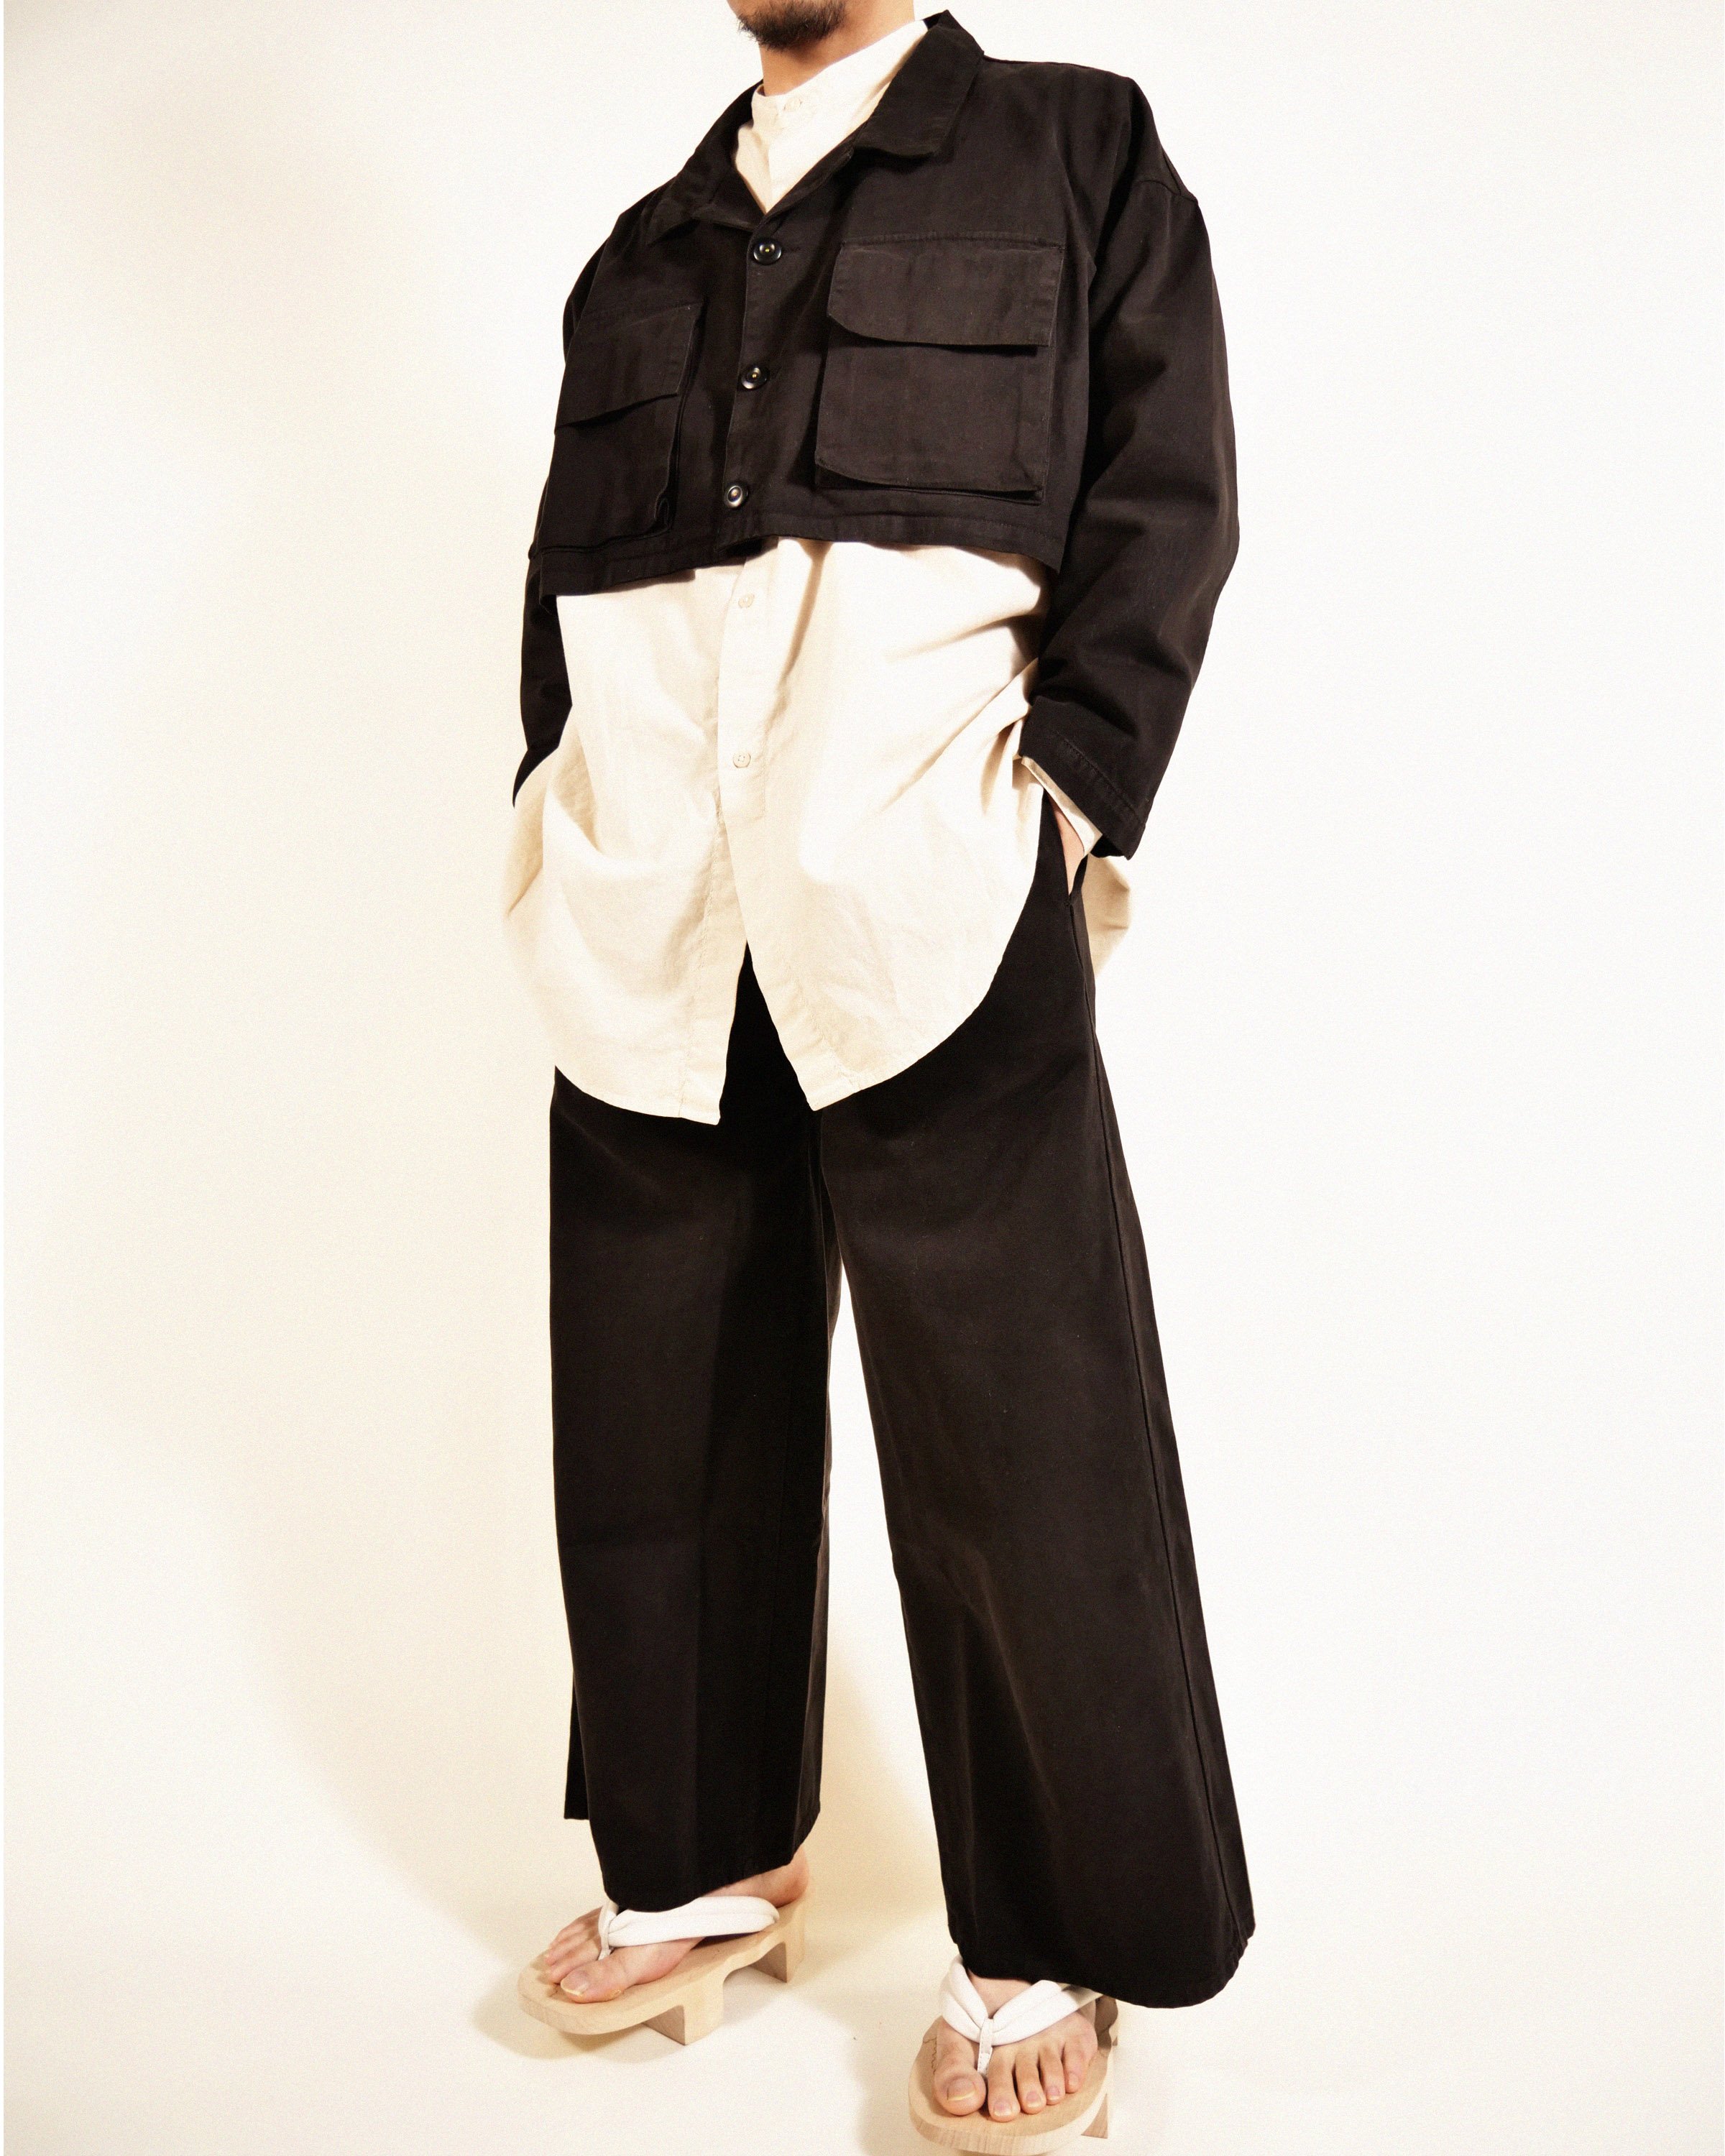 TAN - BLACK | Prospective Flow | Japanese Fashion for Men | プロスペクティブフロー